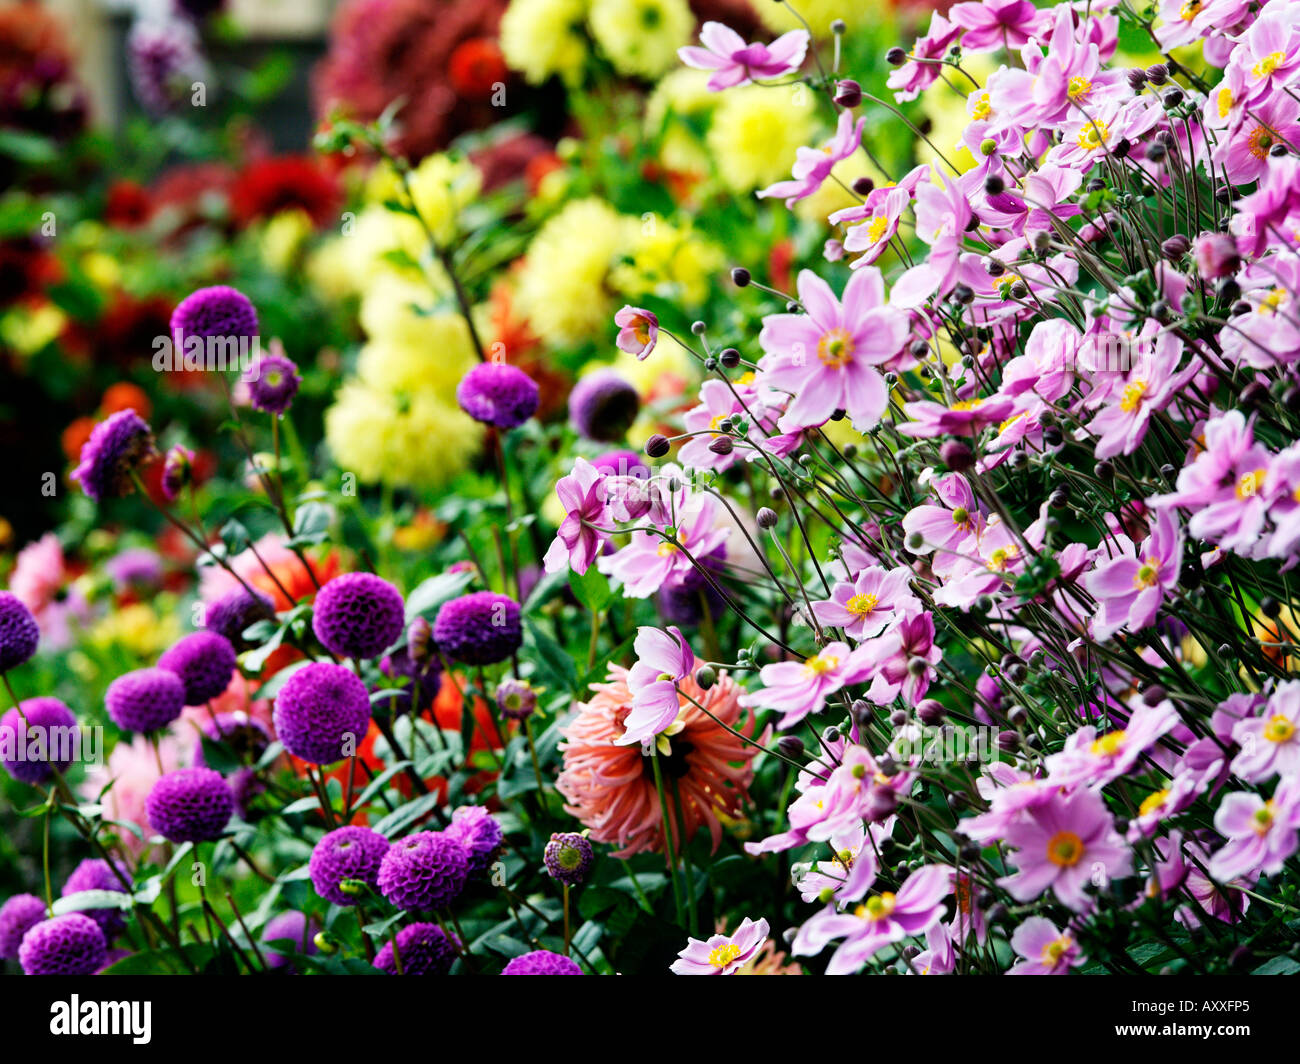 Varie specie di fiori in fiore Foto stock - Alamy